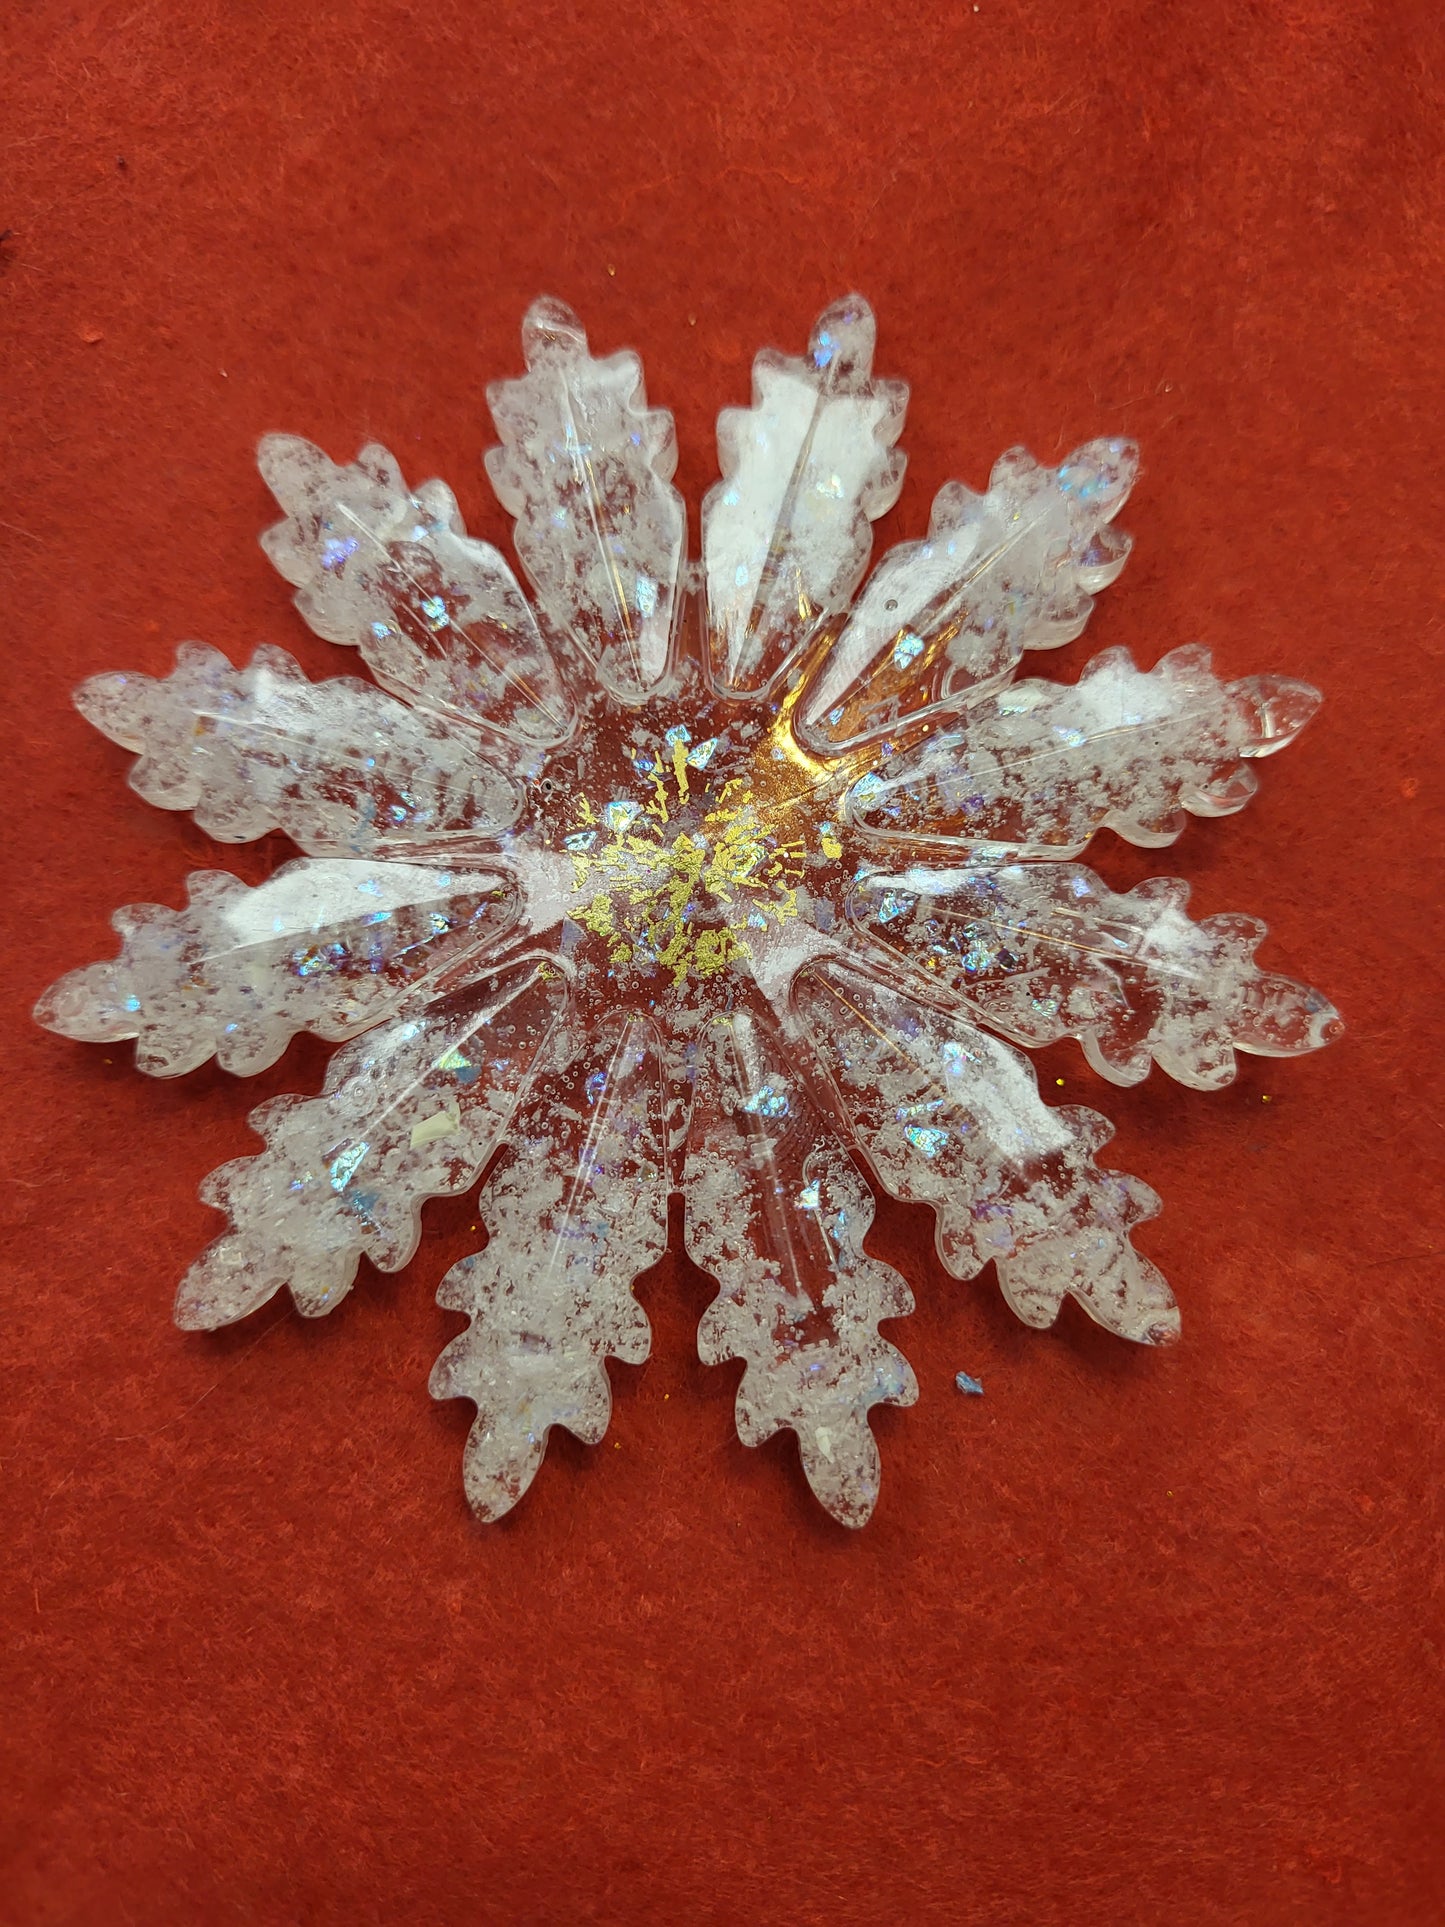 Snowflake ornaments